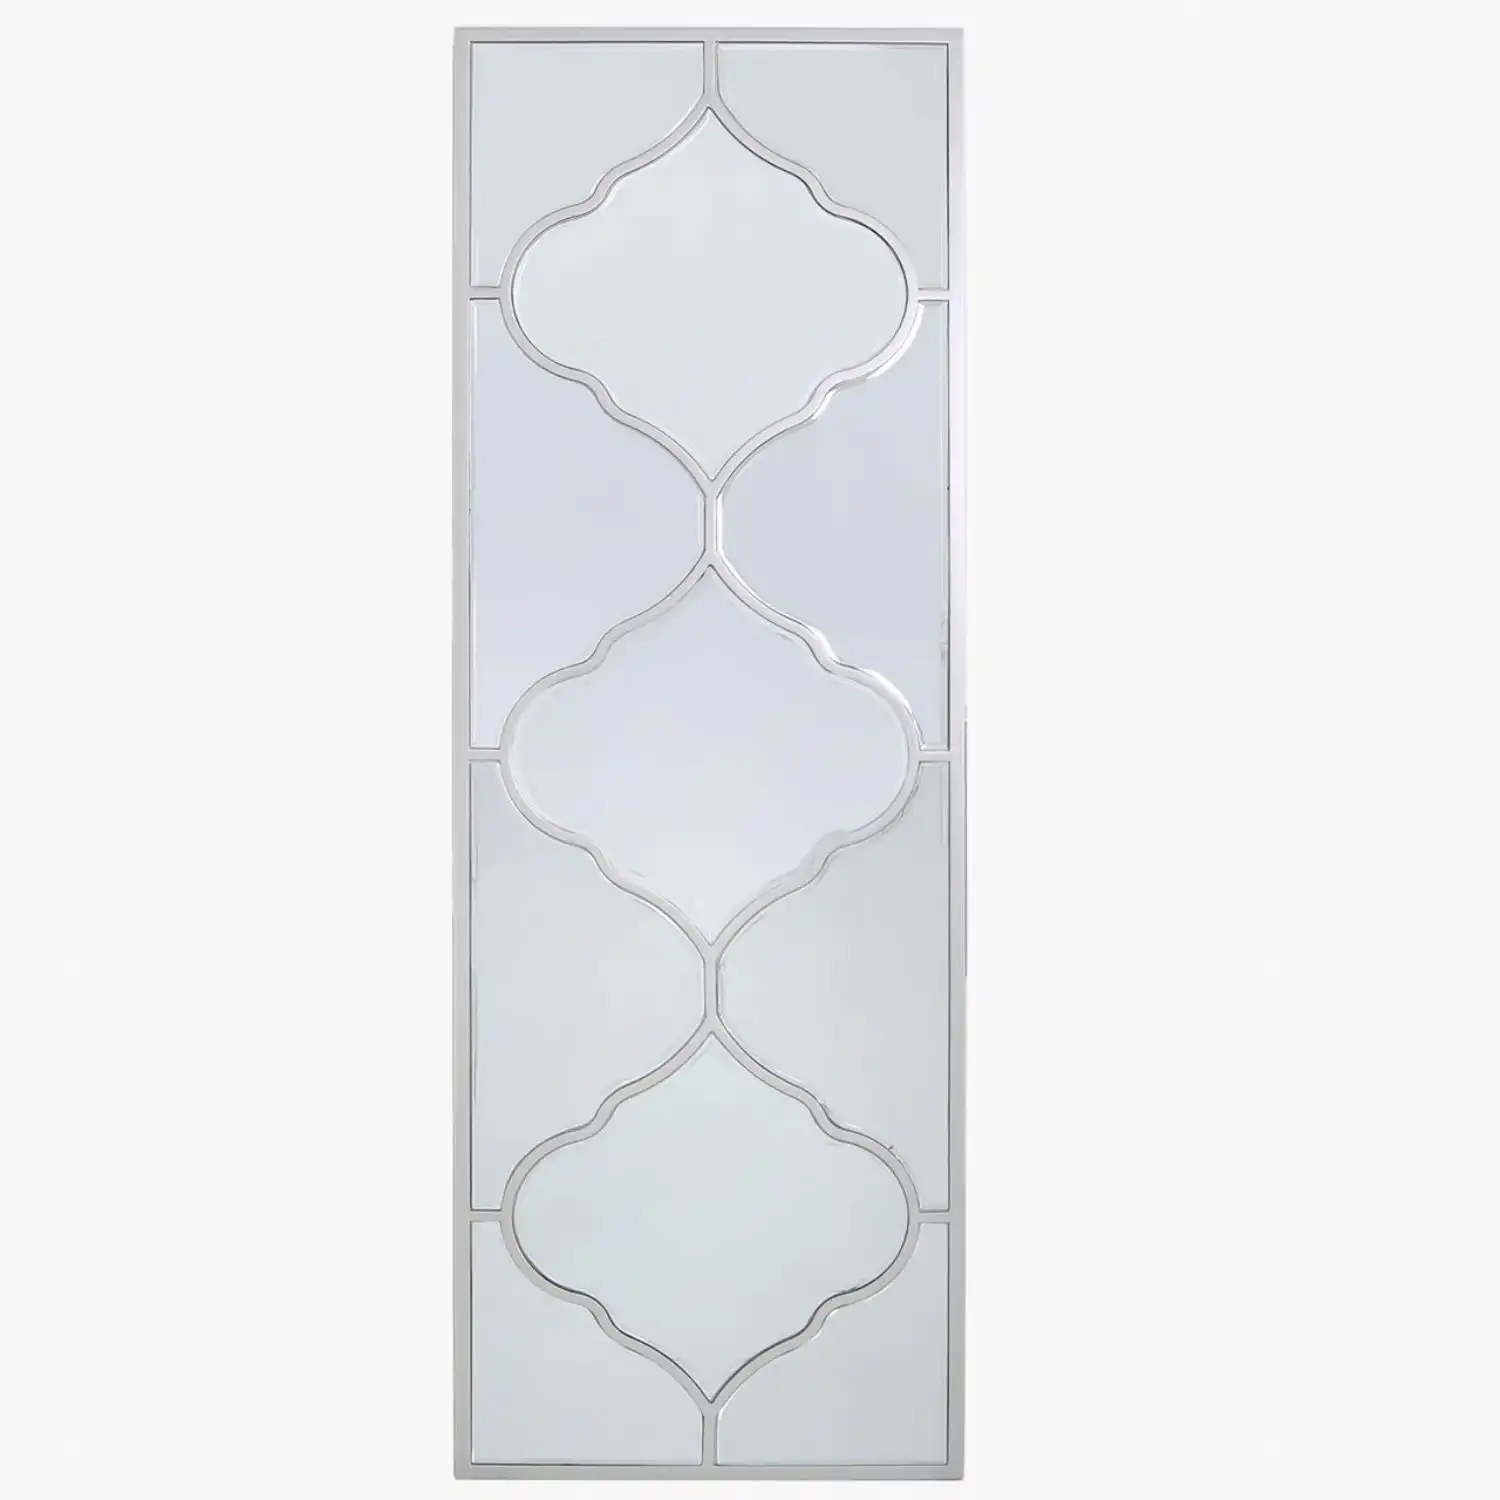 Morocco Vertical Wall Mirror Silver 150cm x 50cm